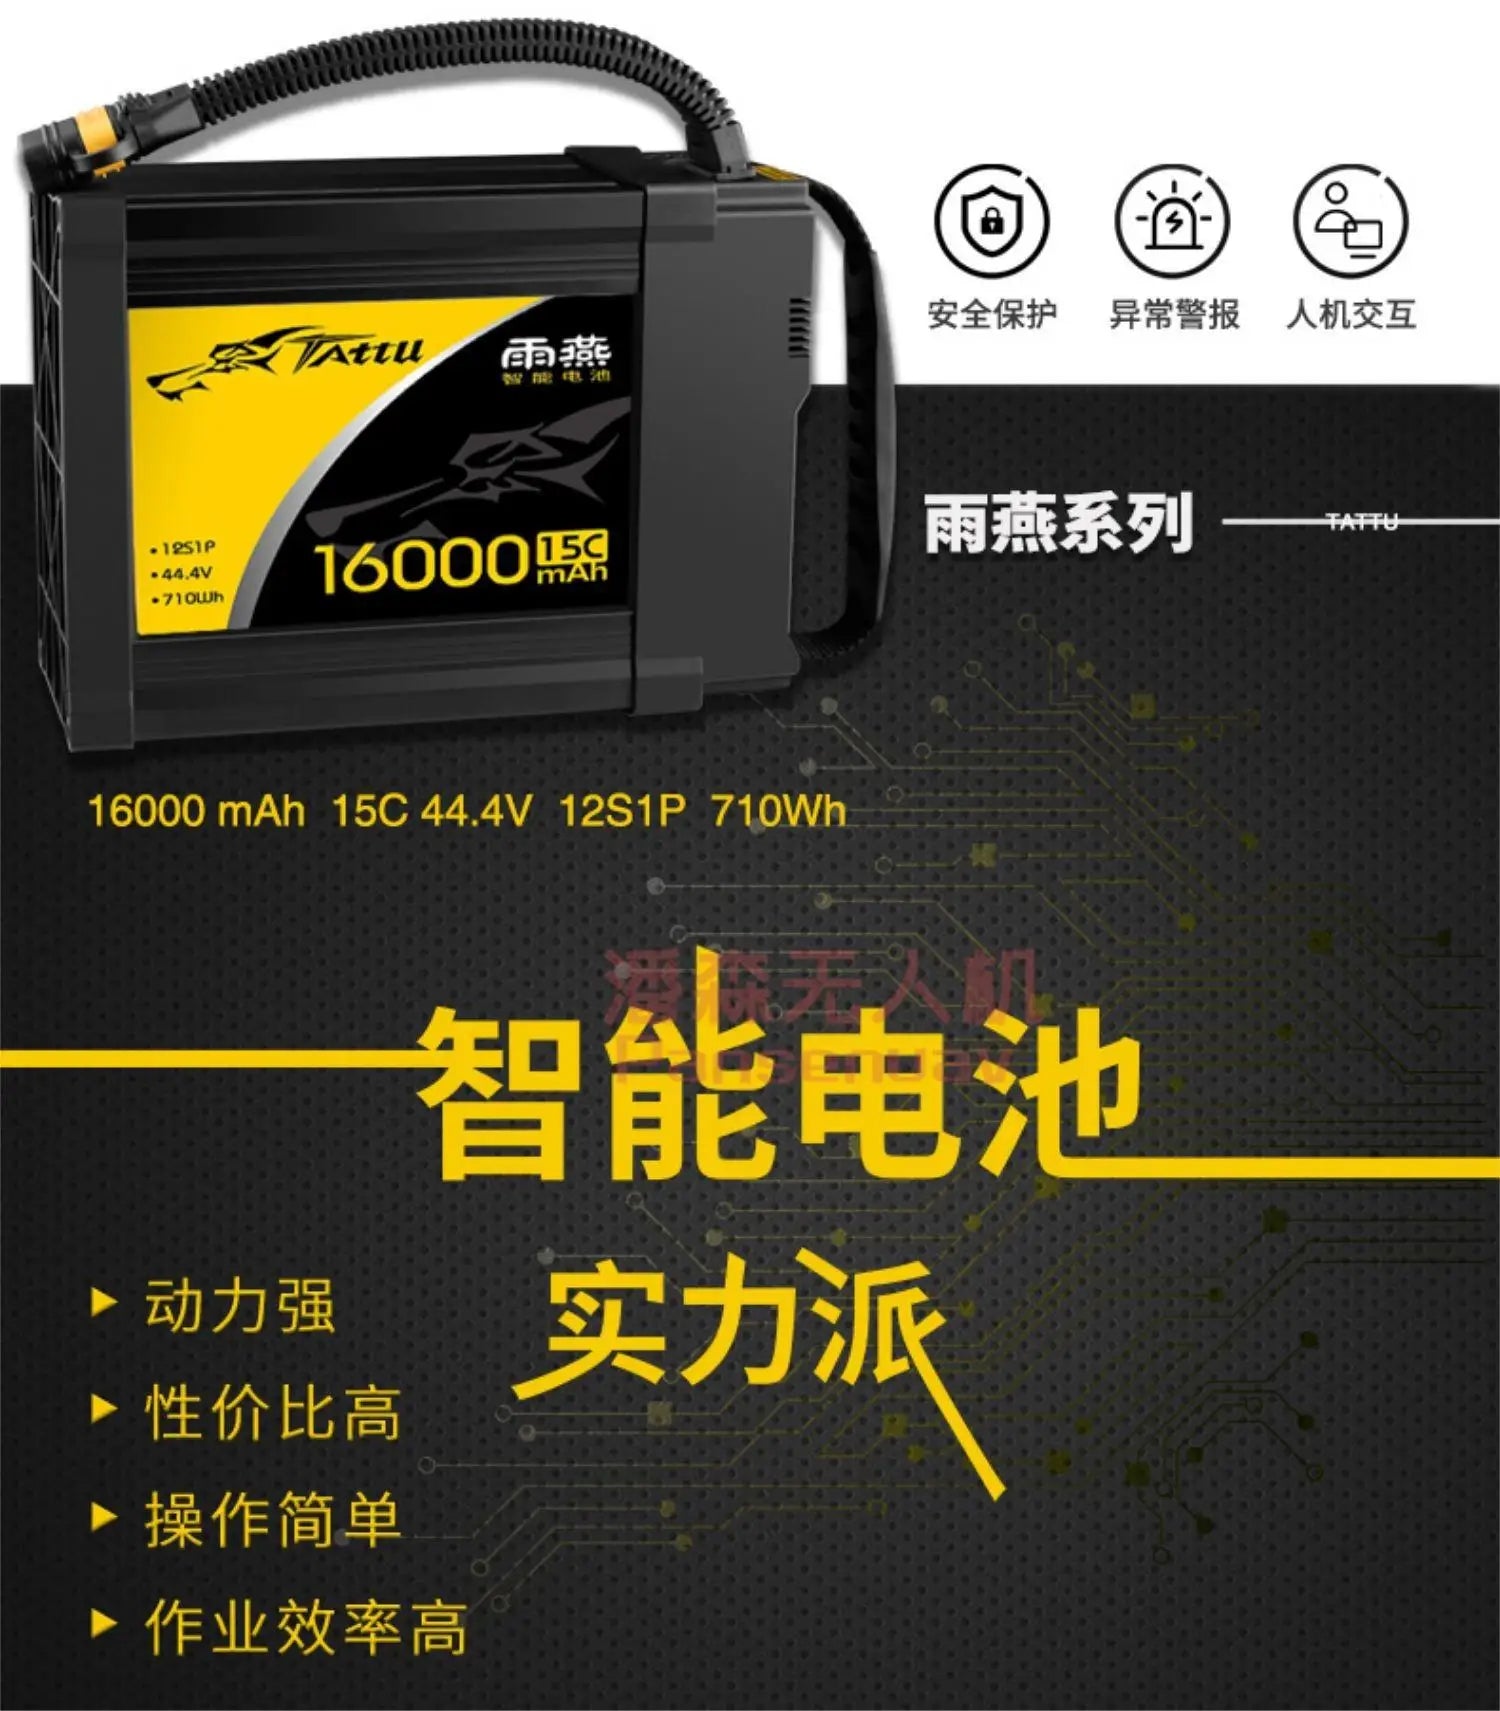 TATTU 16000mAh 44.4V 12S LiPO Battery, each battery is NEWLY PRODUCED, NEVER LONG-TERM STORAGE